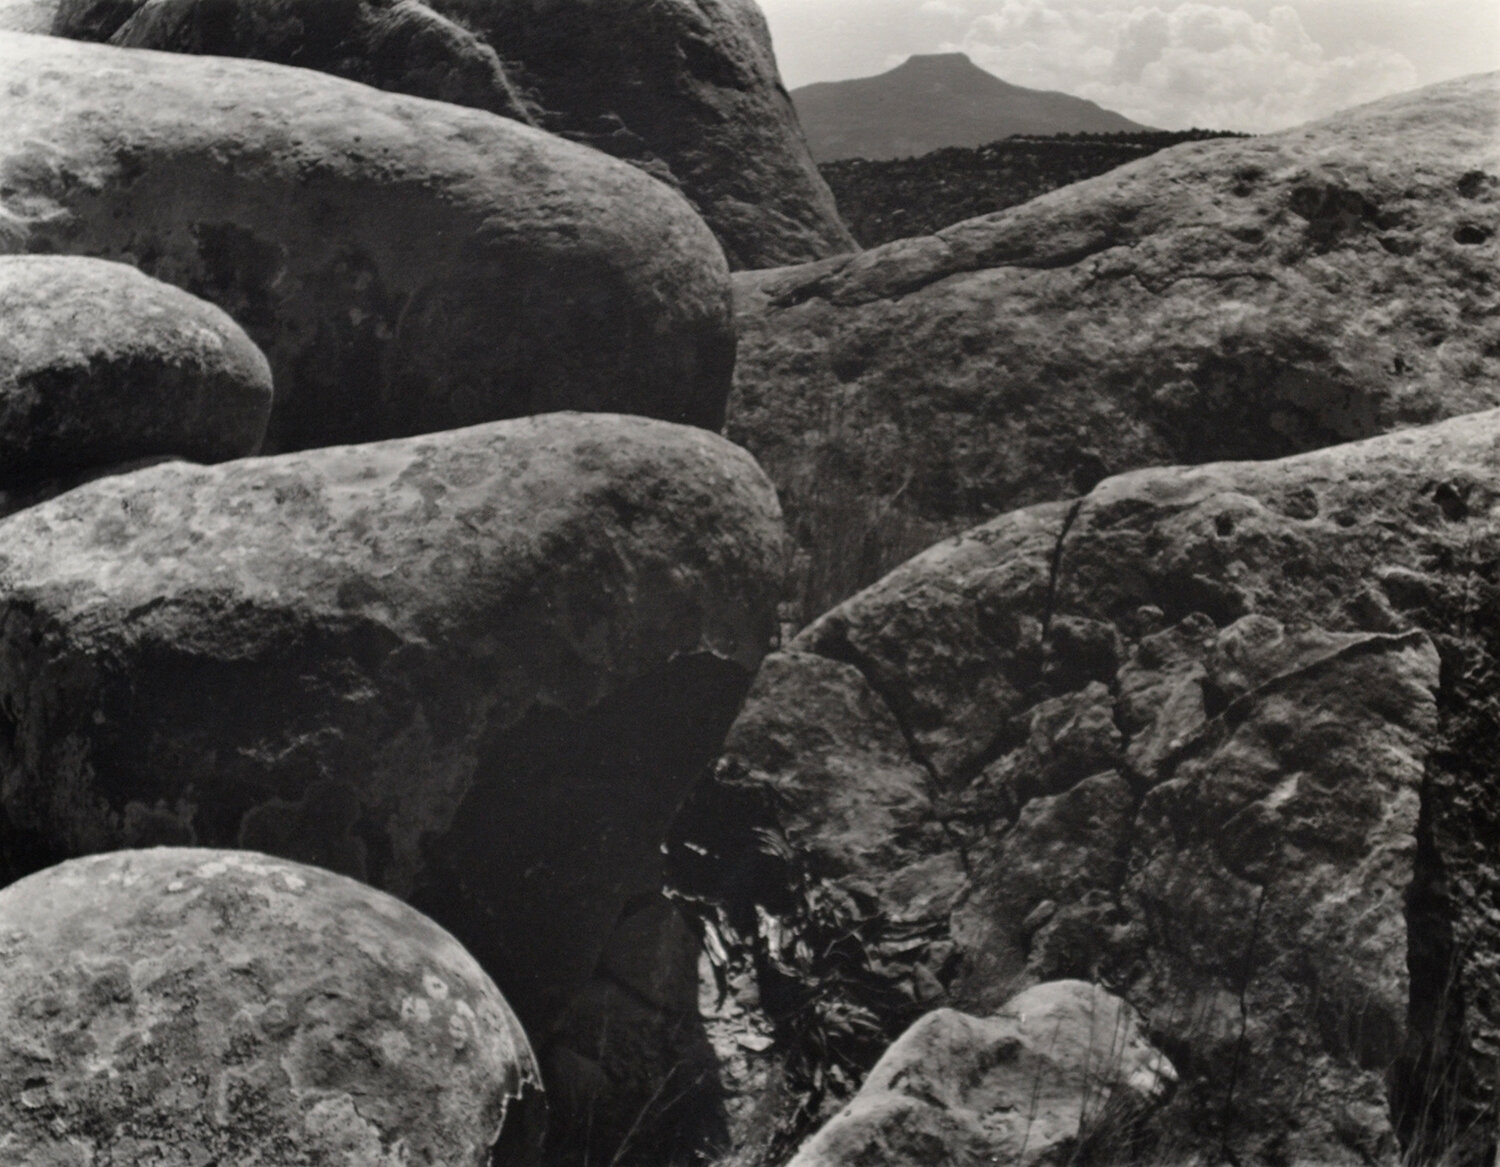 Boulders and Padernal, 1991